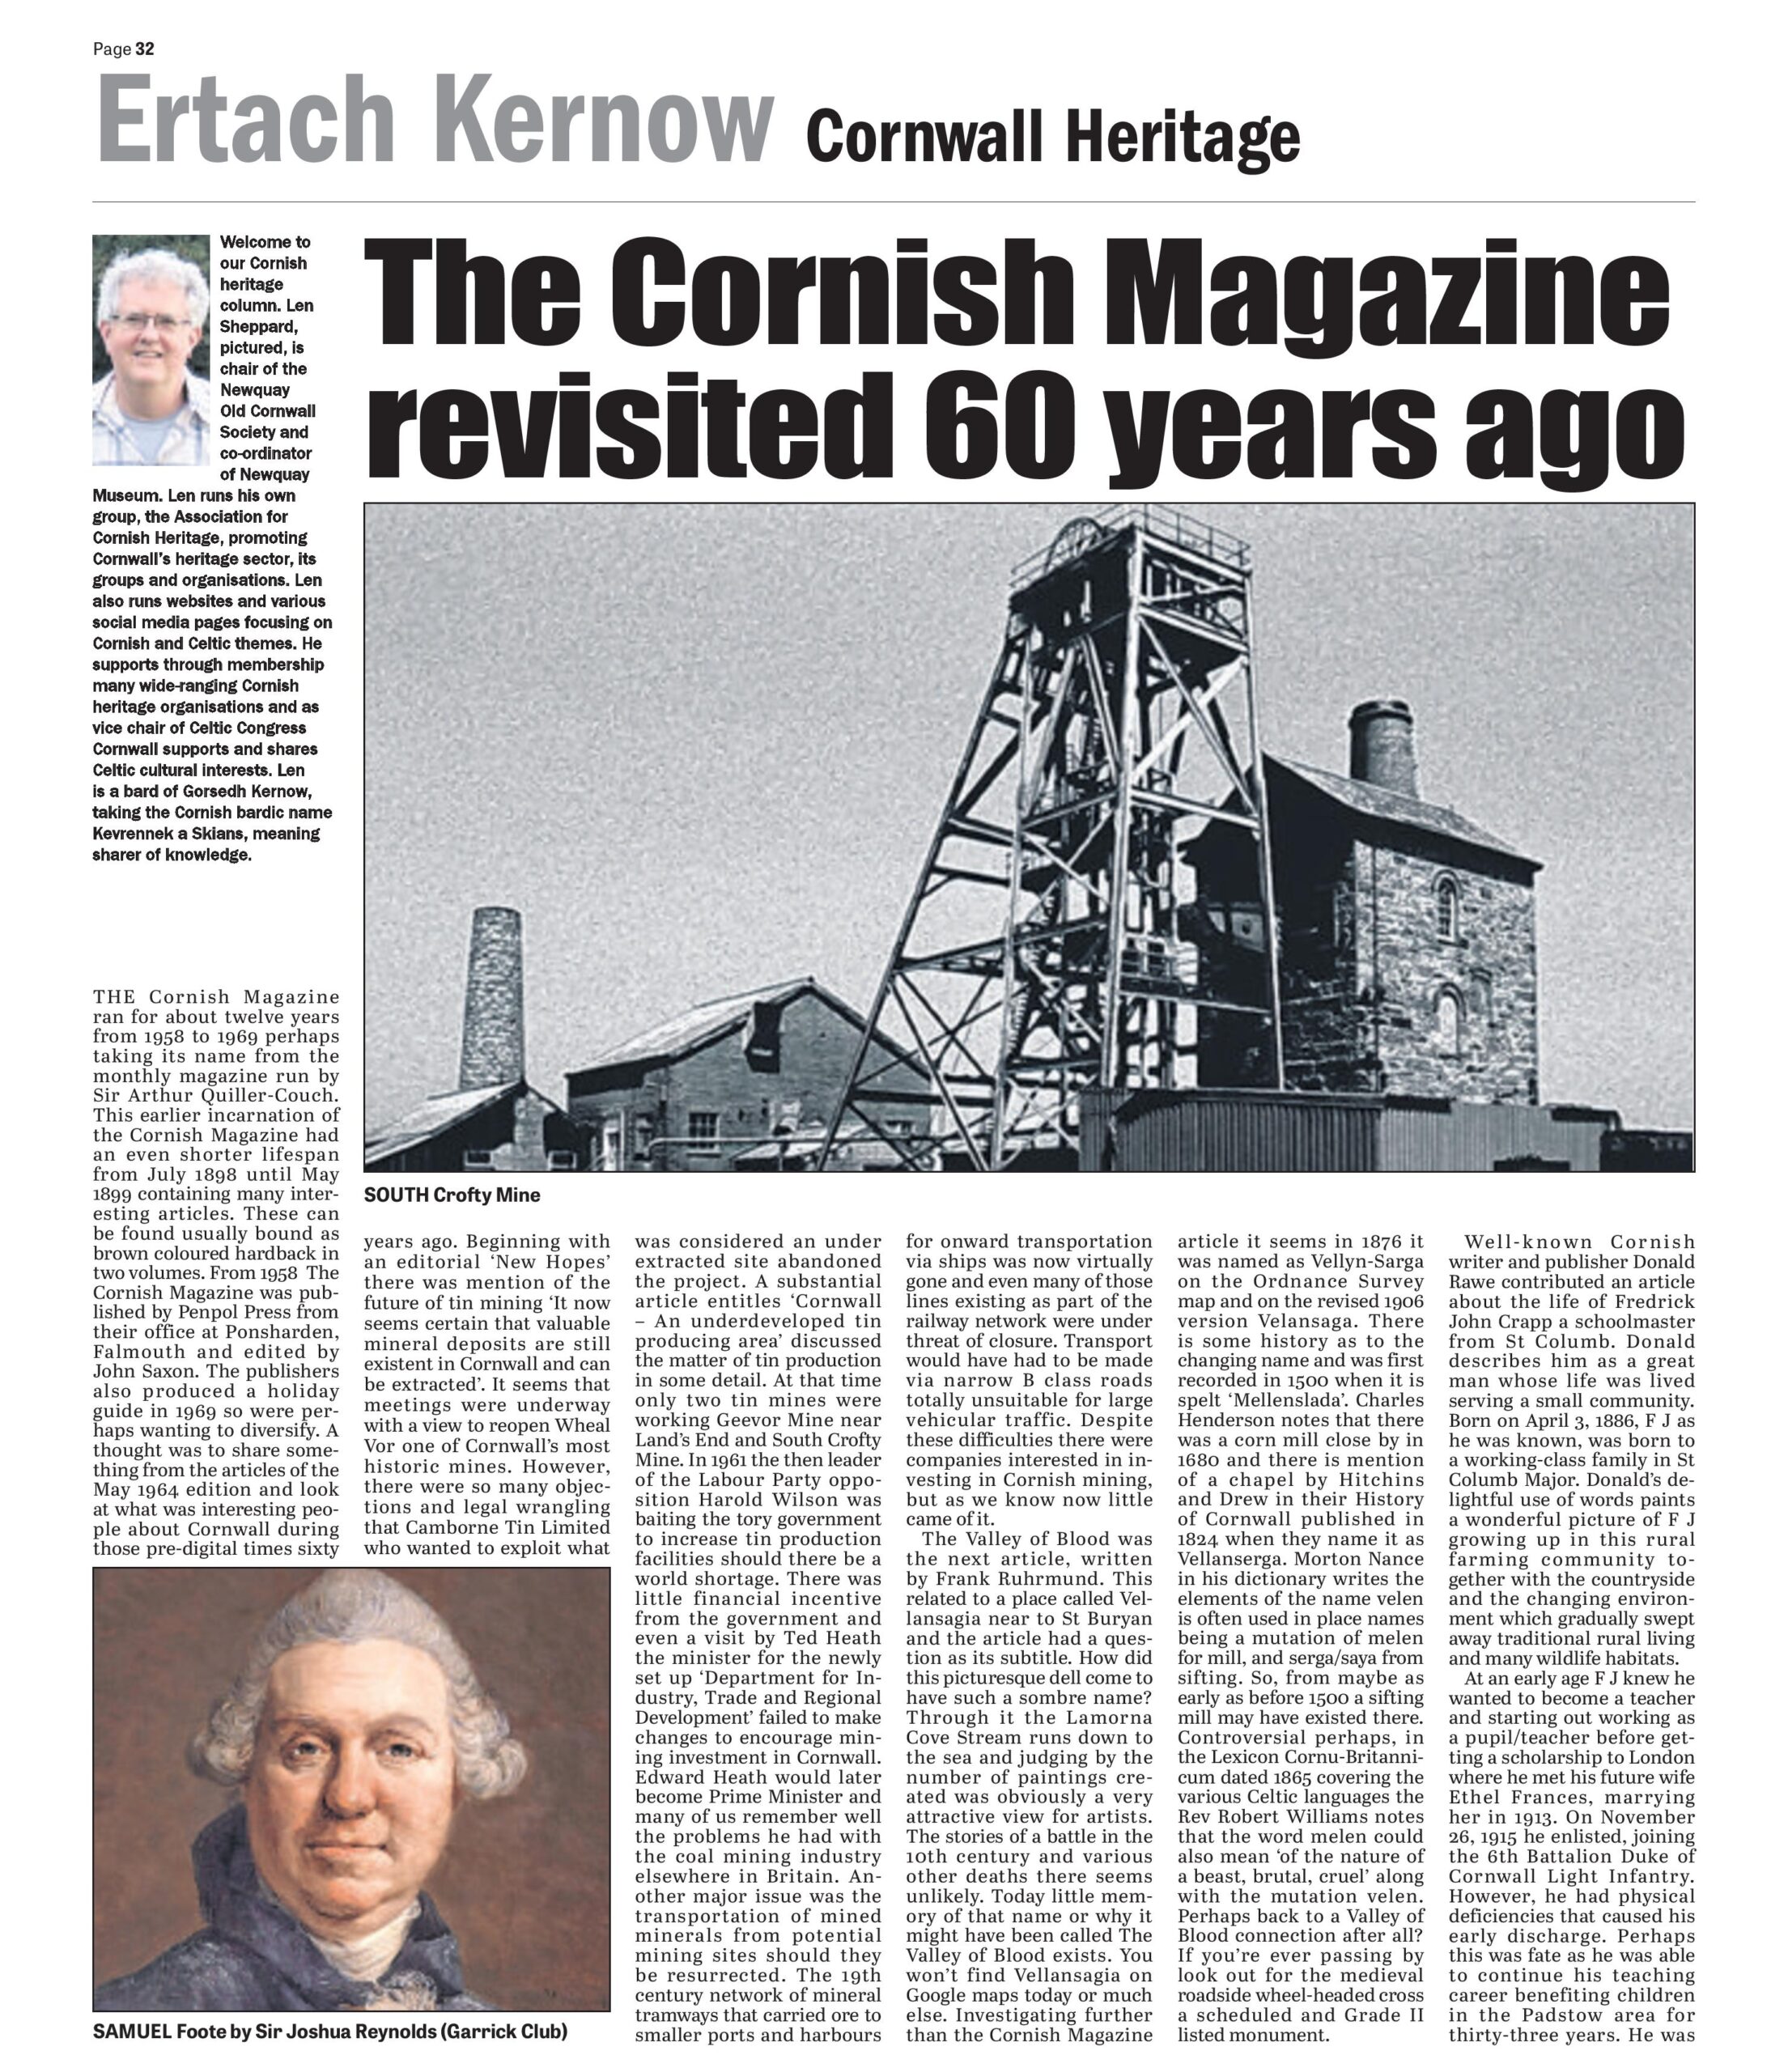 The Cornish Magazine revisited 60 years ago